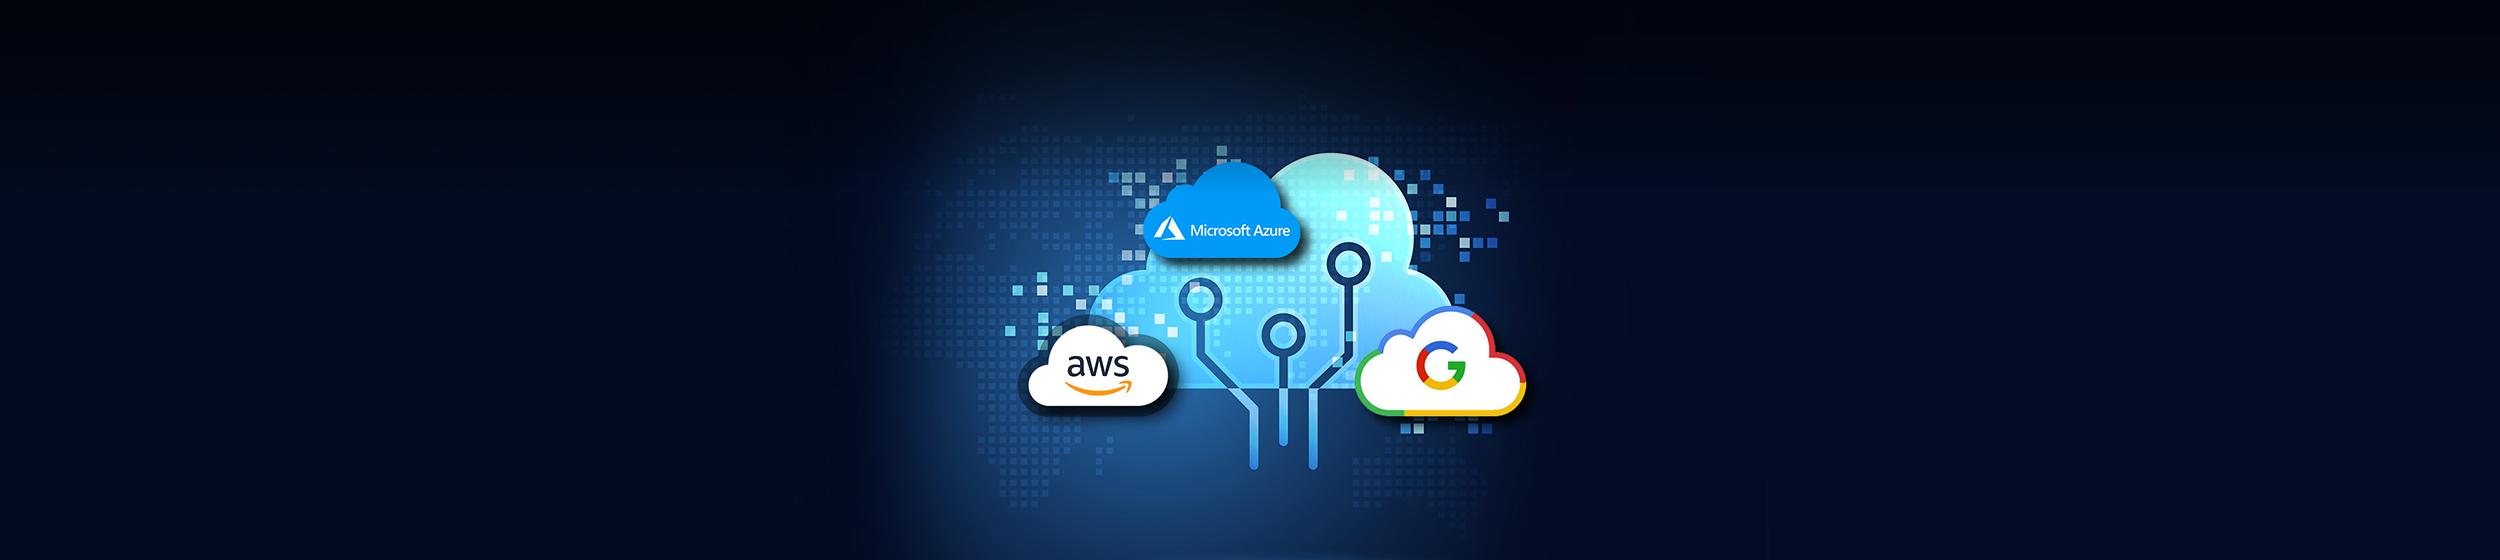 Banner-AWS Vs. Azure Vs. Google Cloud: Comparing Top Cloud Platforms For MLaaS